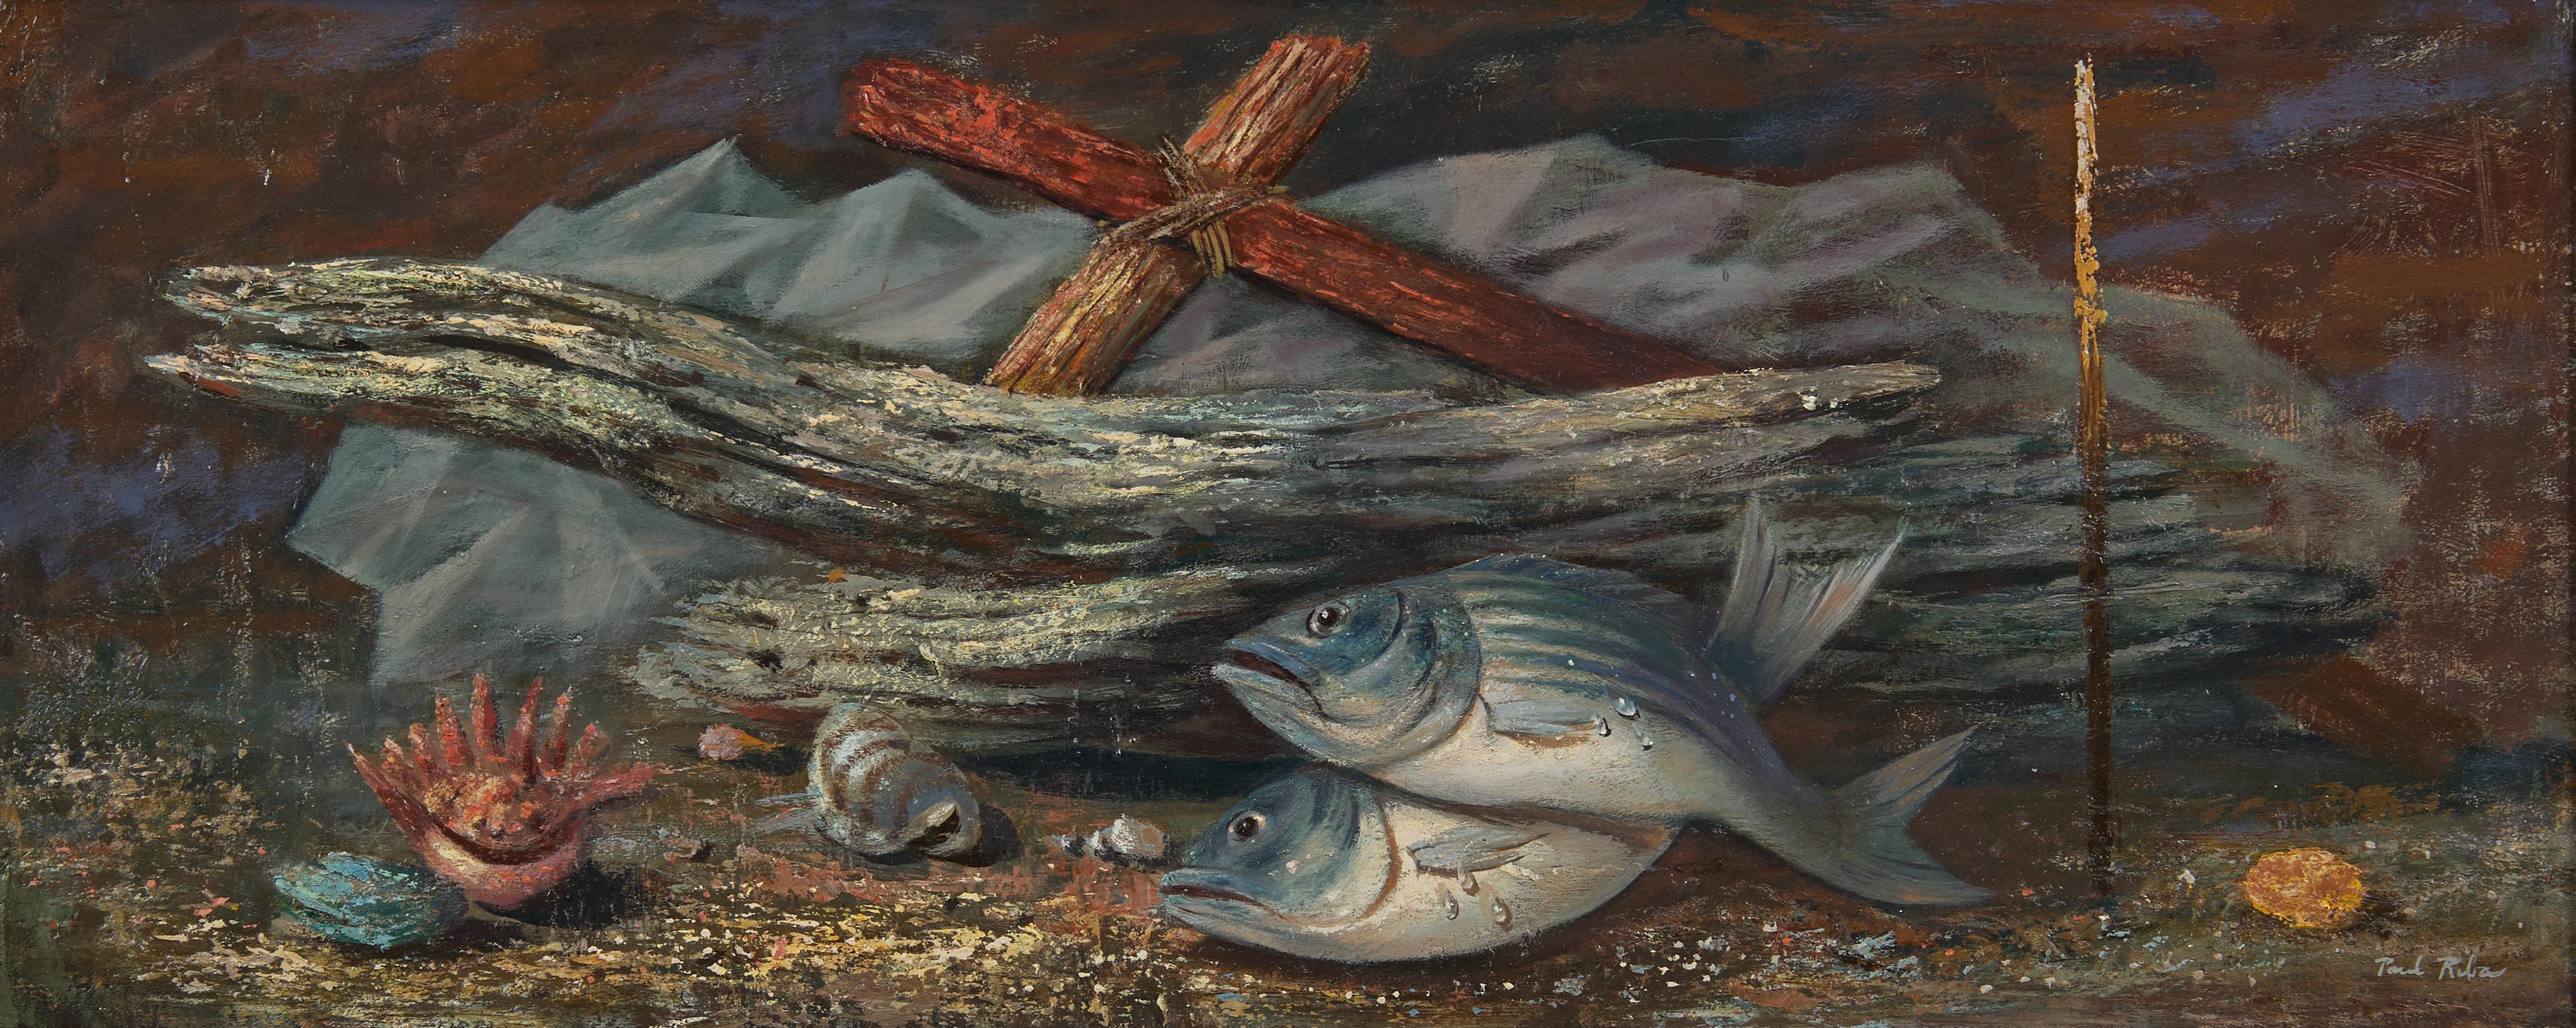 Paul Riba Figurative Painting - Driftwood & Fish, Mid-20th Century Magical Realism, Surrealist Cleveland Artist